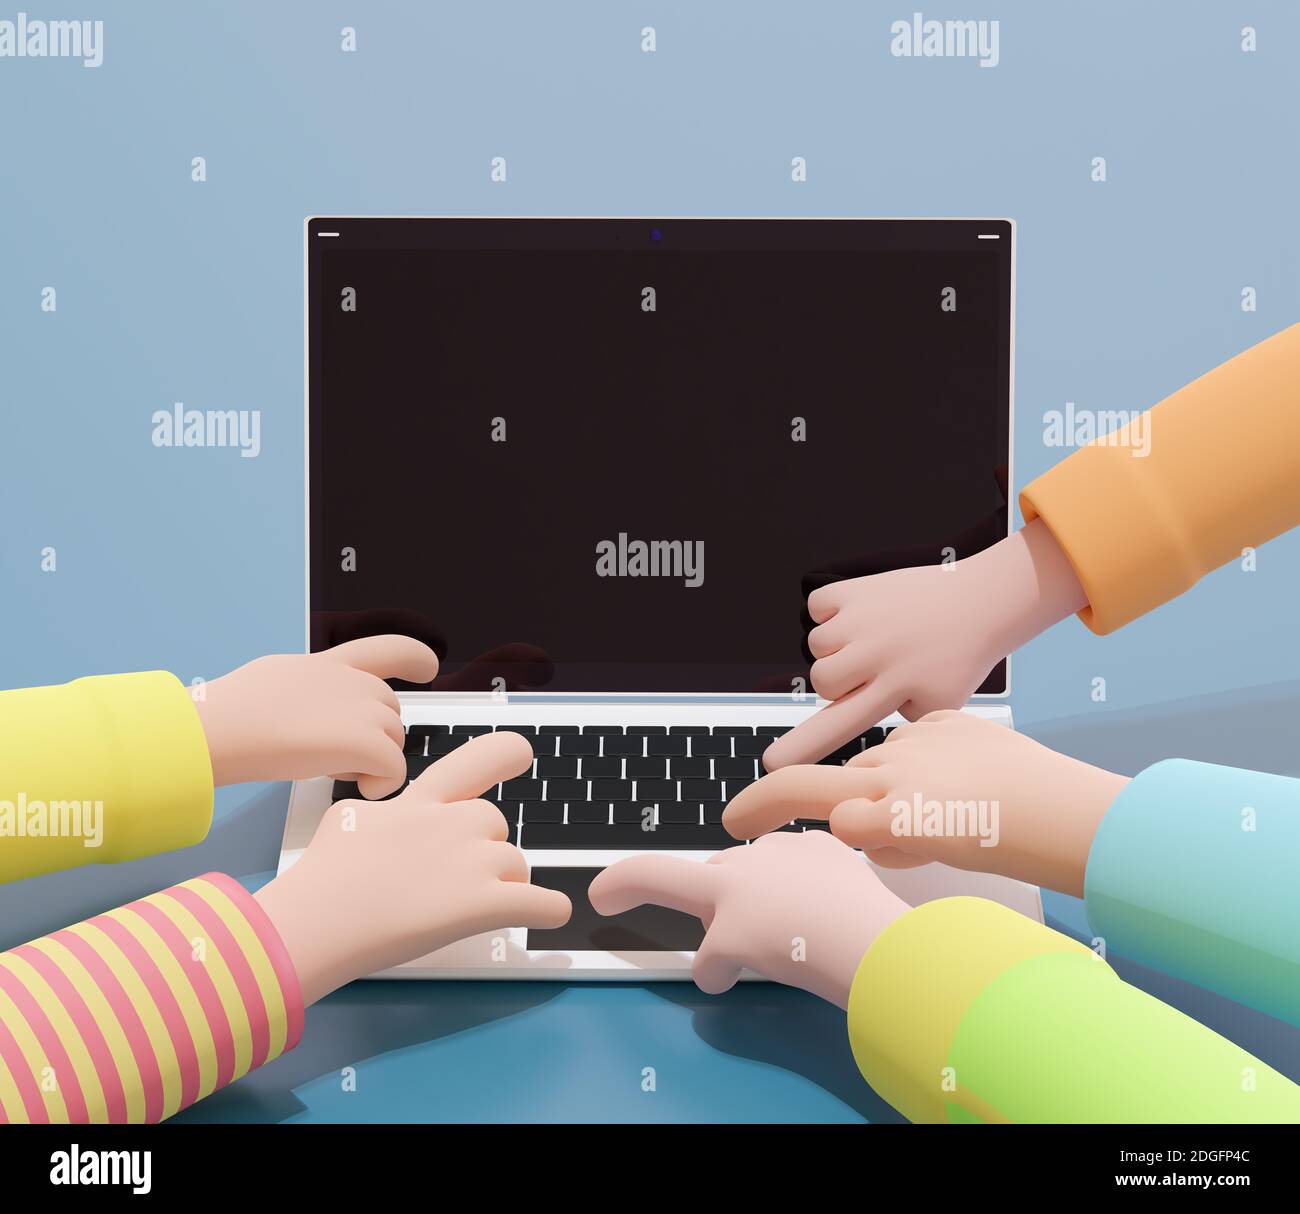 Kids cartoon hands pressing laptop buttons. 3d illustration. Render. Stock Photo